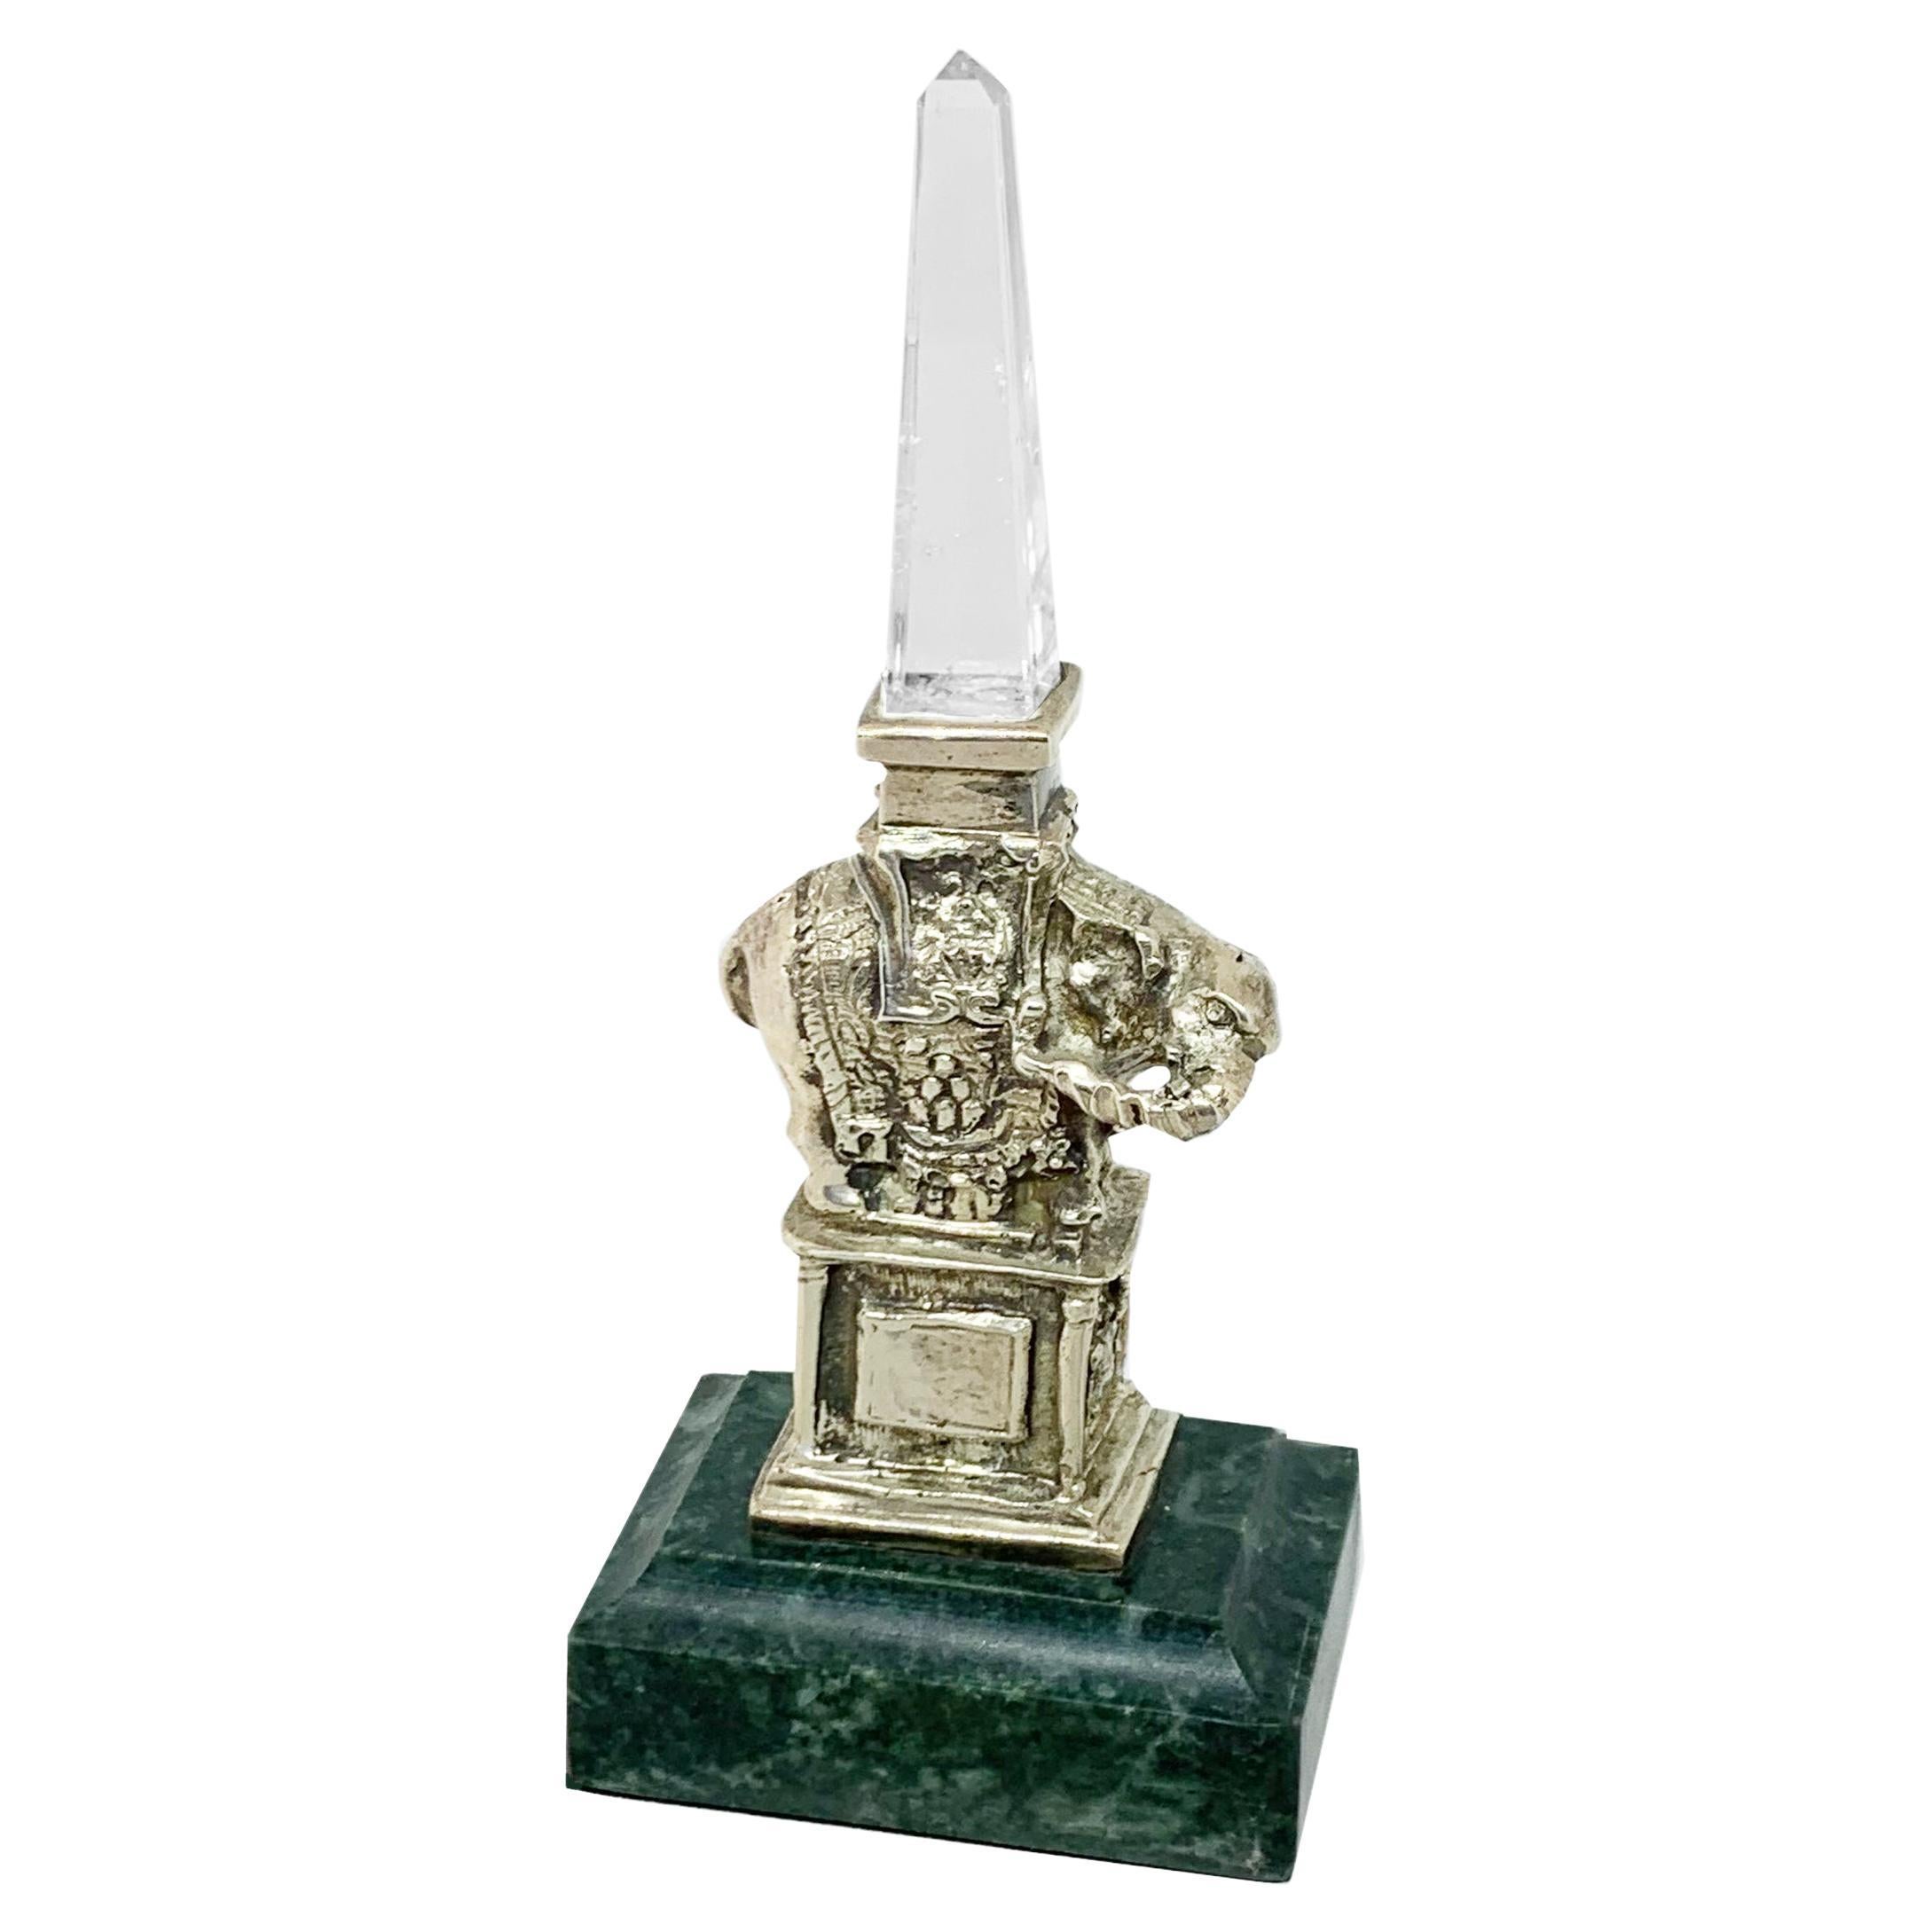 Silver Statue with Rock Crystal Obelisk Reproducing Bernini's "Minerva Chick"